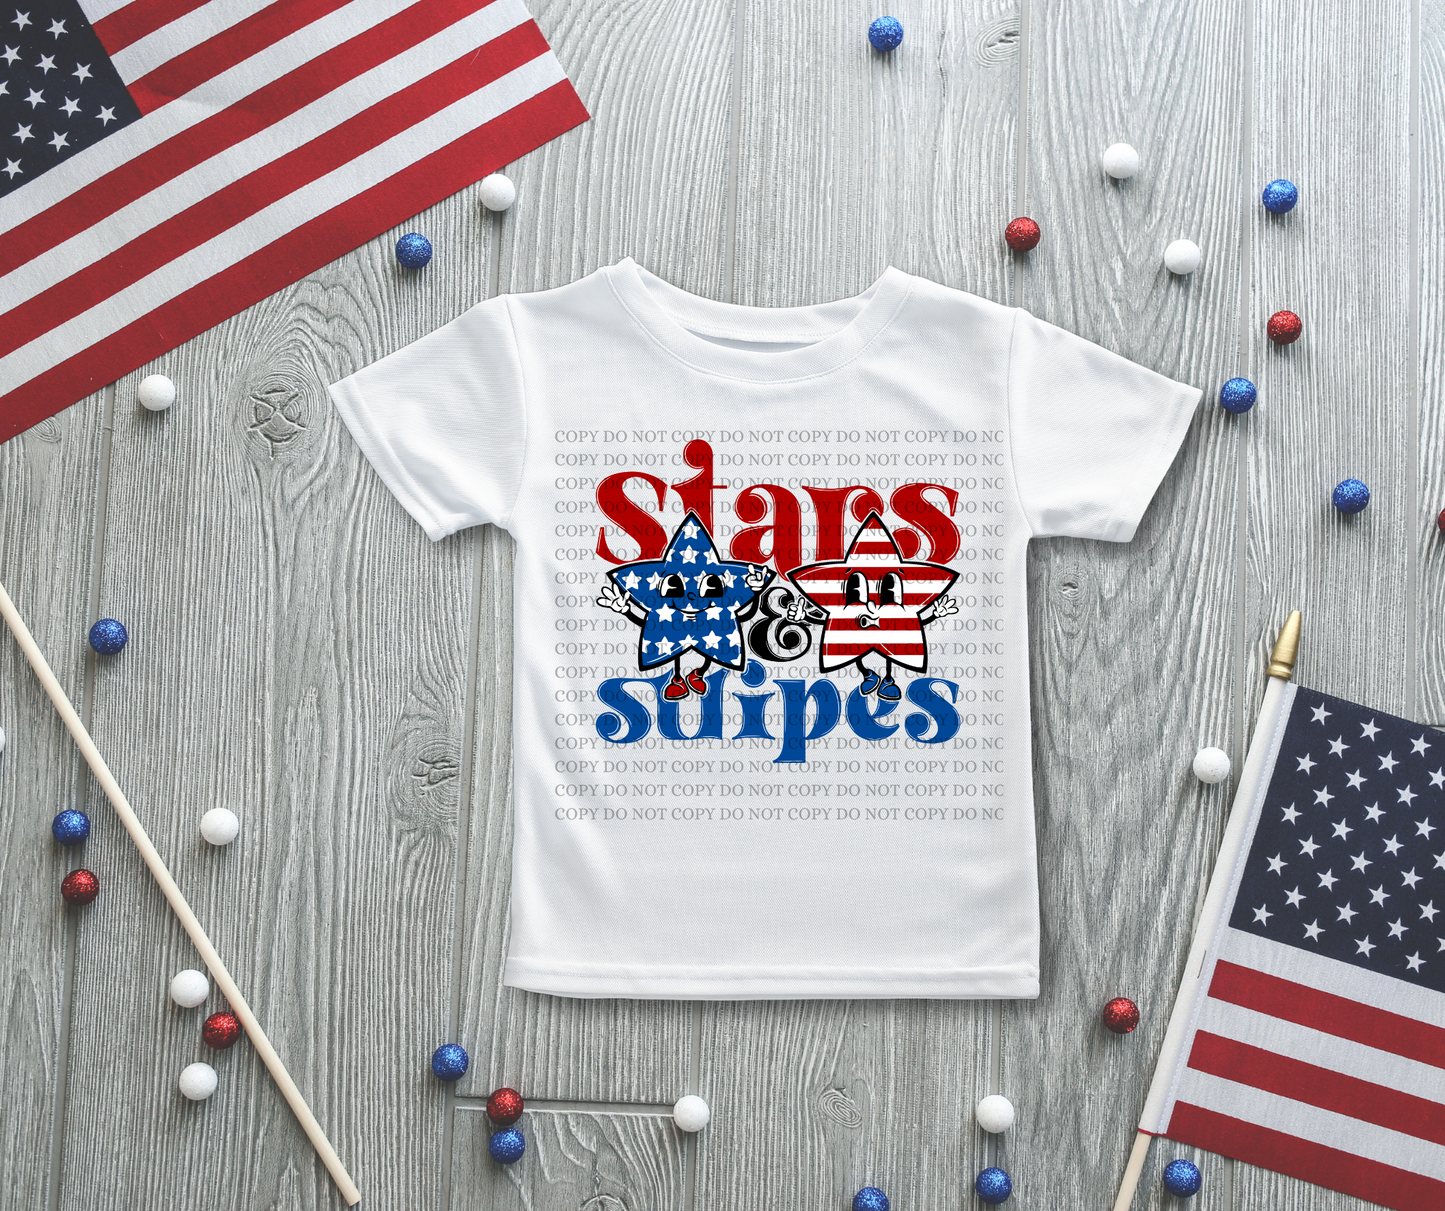 Stars and Stripes Kids Shirt - Mayan Sub Shop